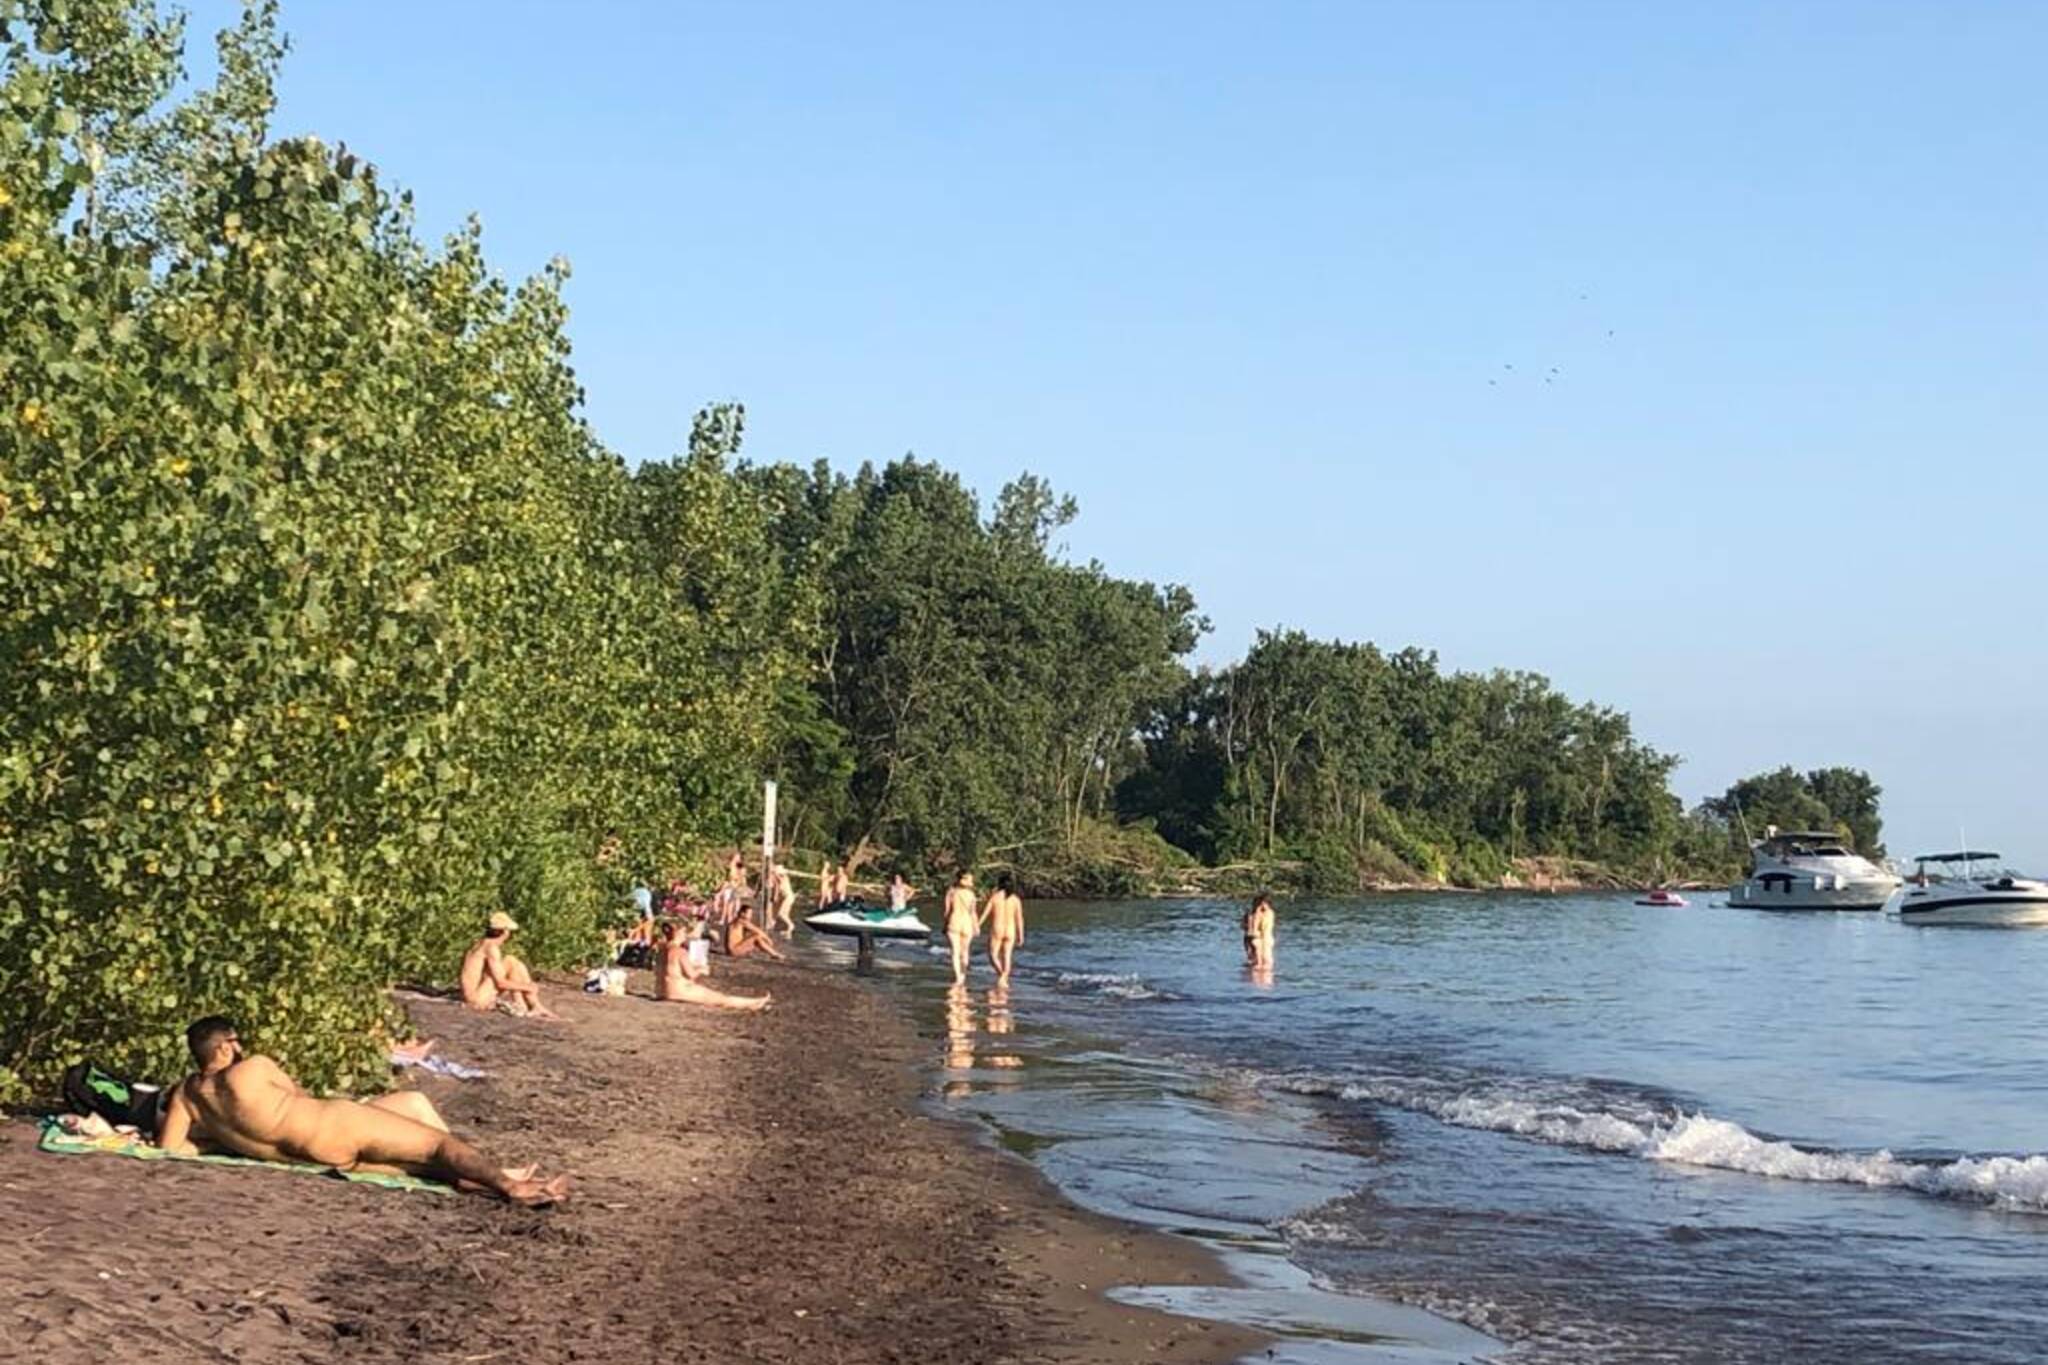 Naturist Beach Sex Pic Gallery - Hanlan's Point is the Toronto Island's famous nude beach